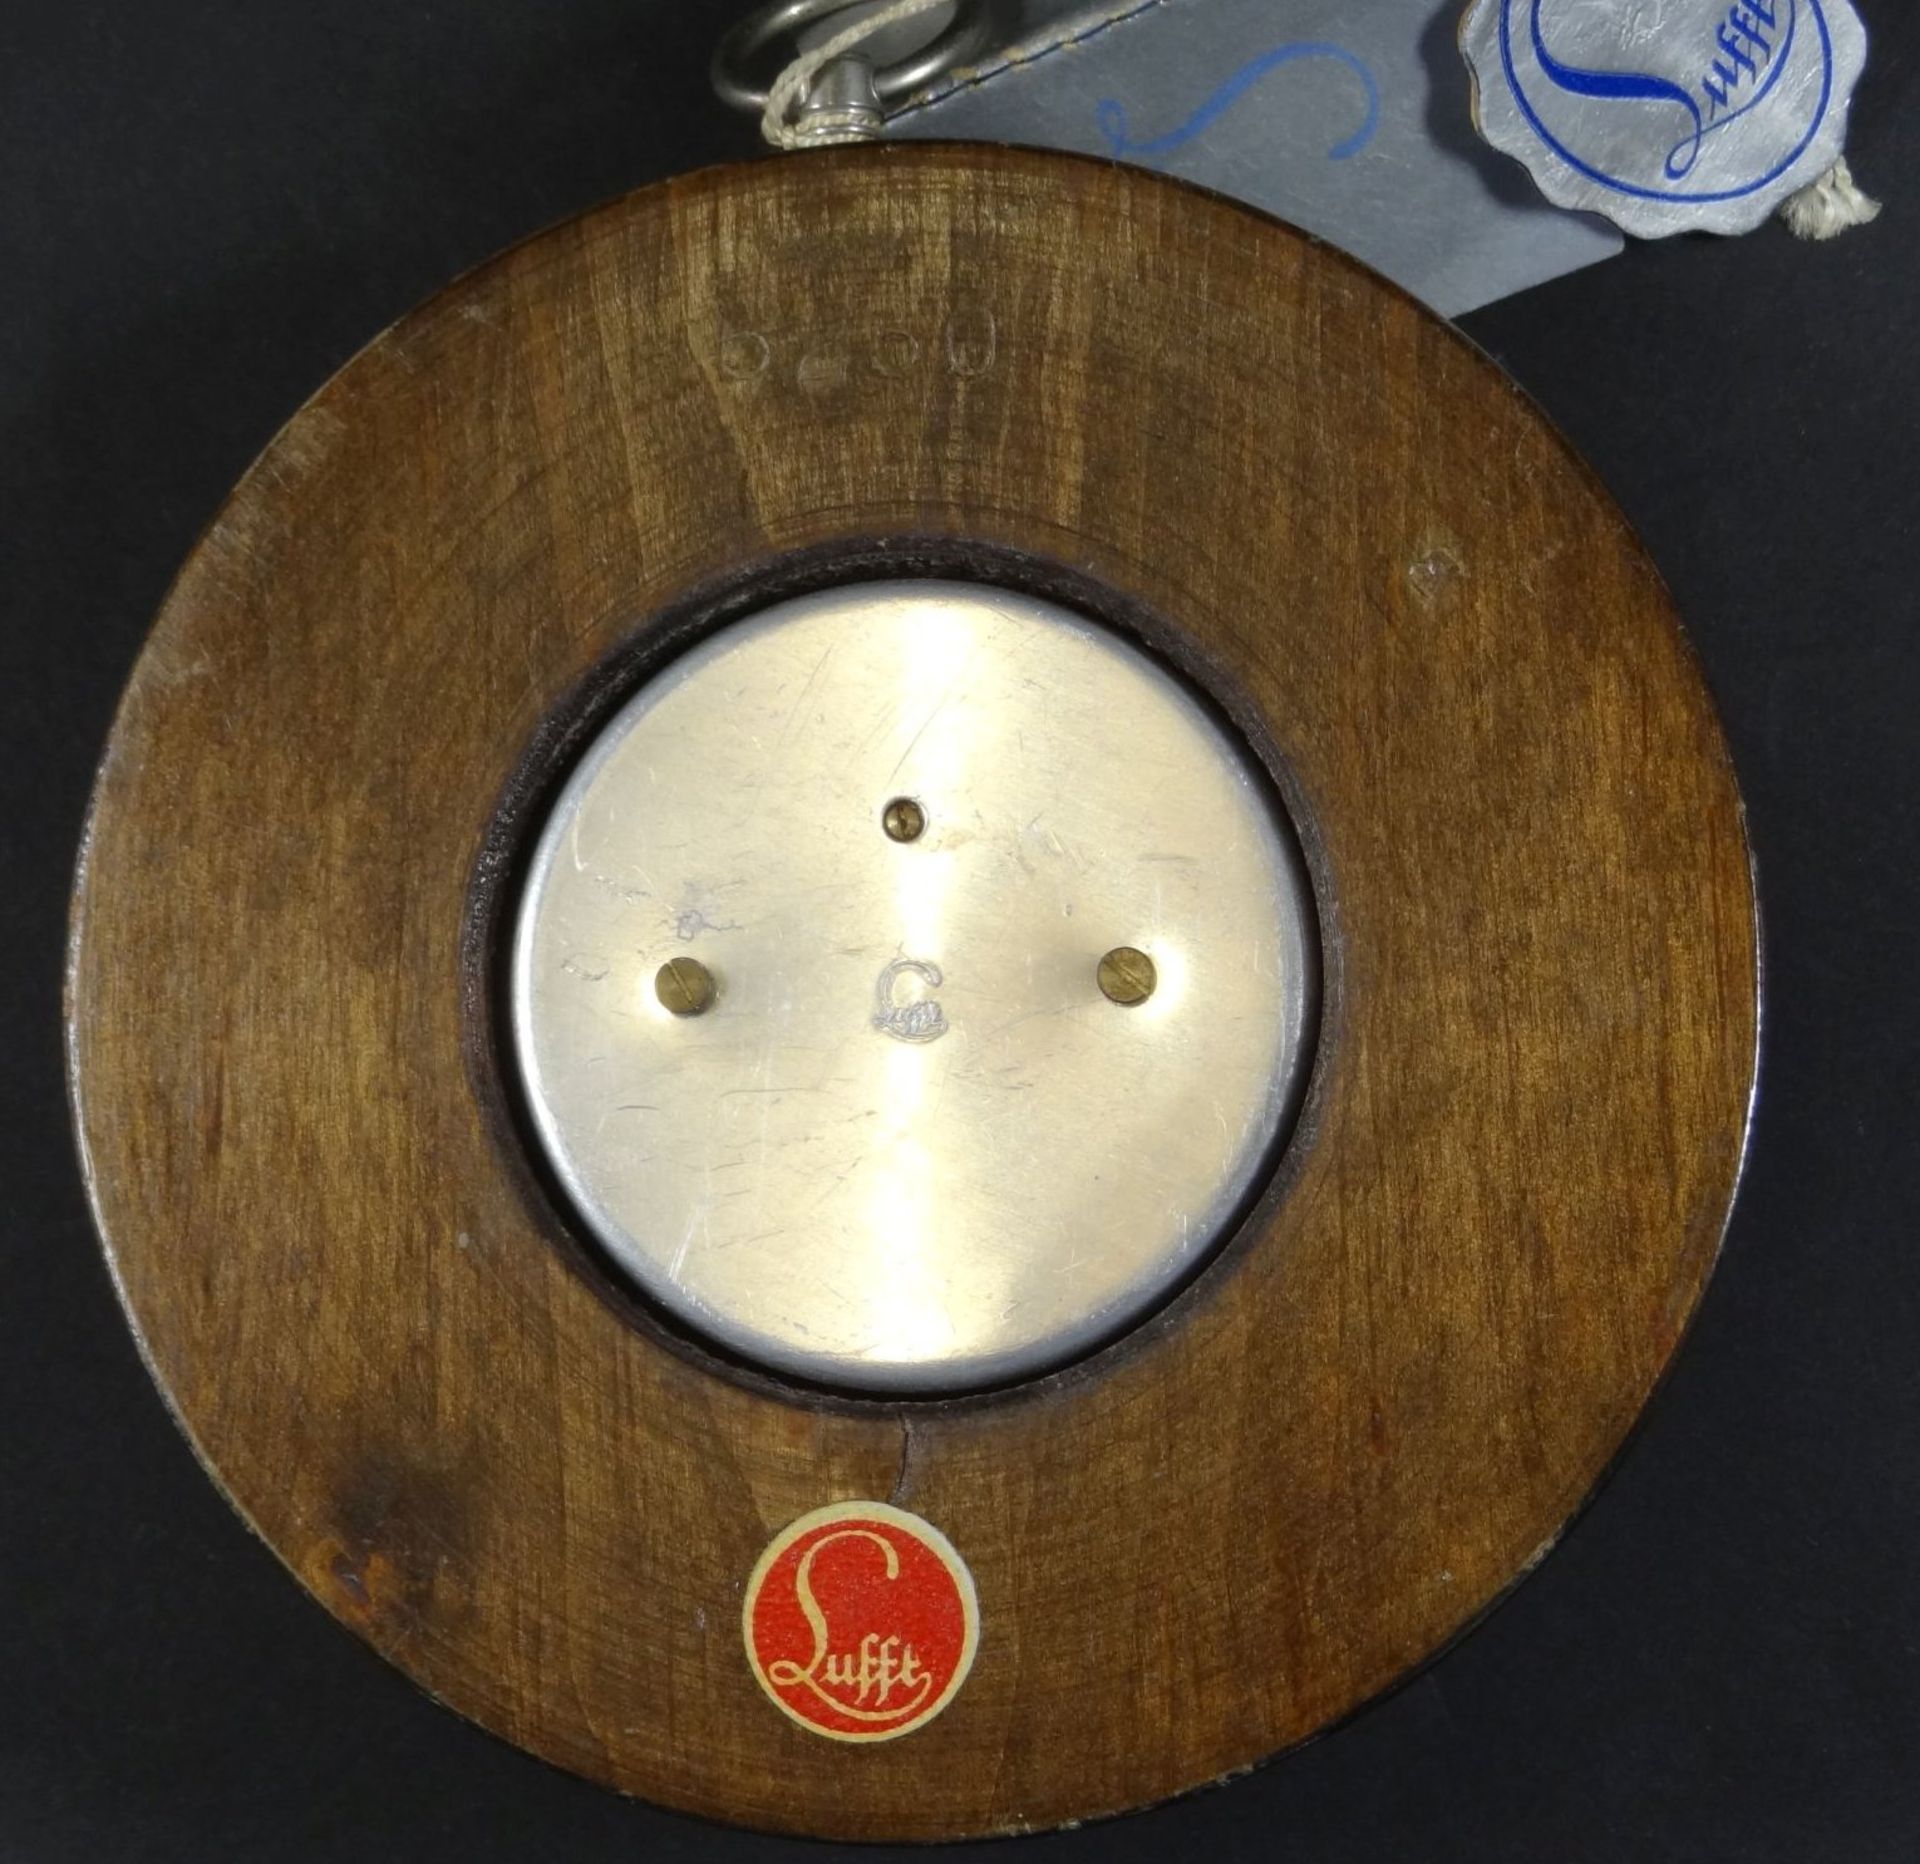 kl. Wandbarometer "Lufft" neuwertig, D-12 cm - Image 4 of 4